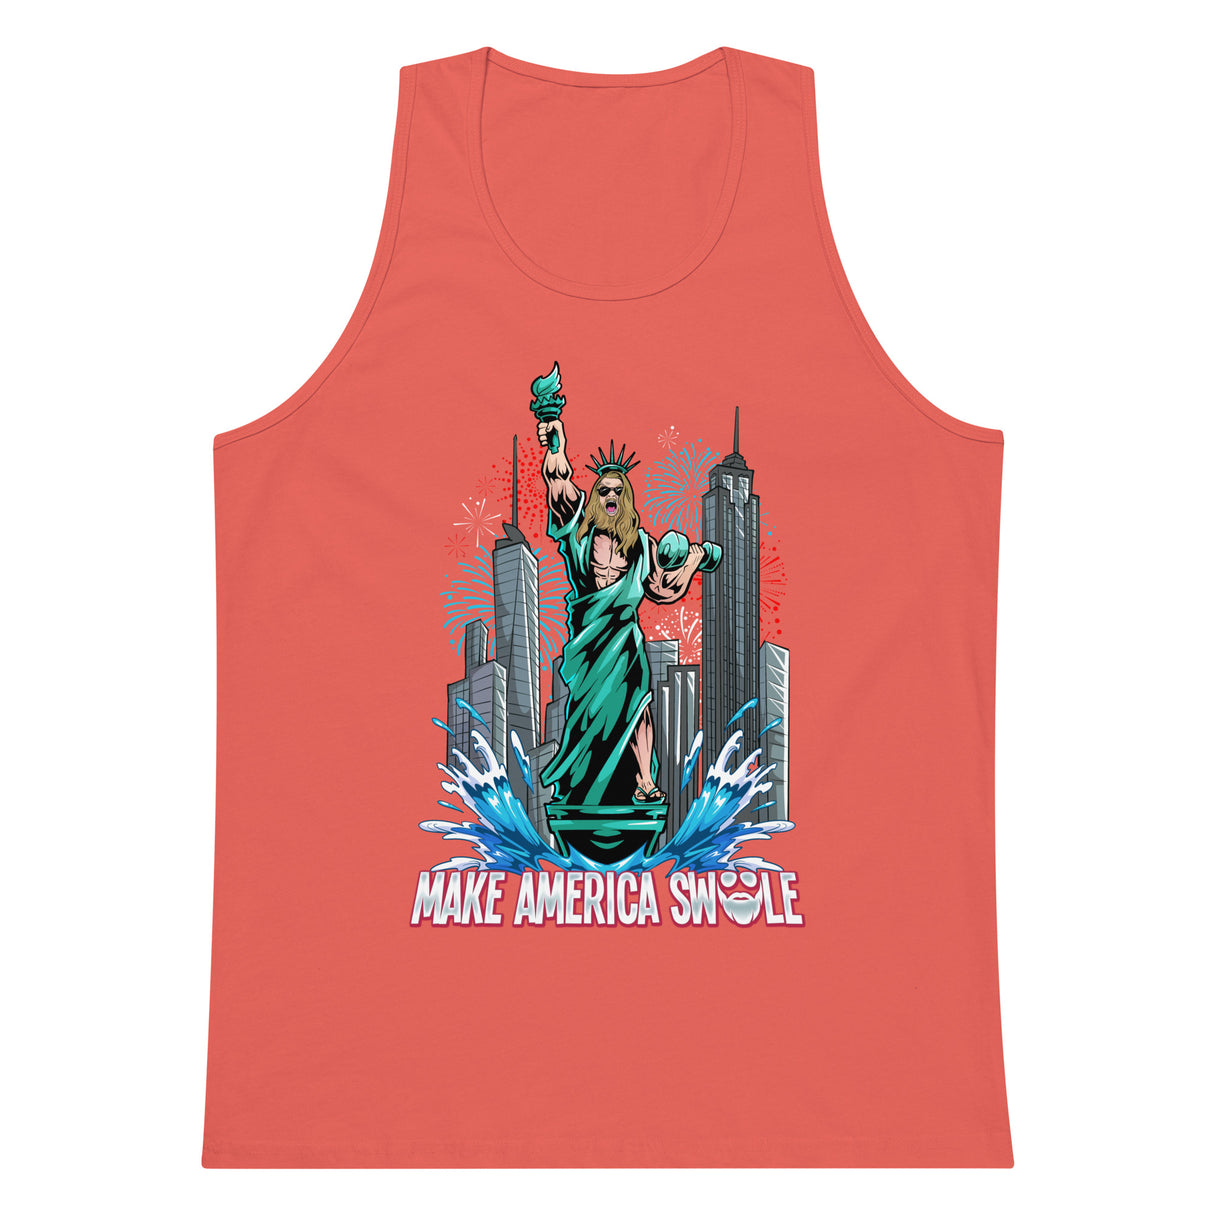 Make America Swole (Image) Premium Tank Top